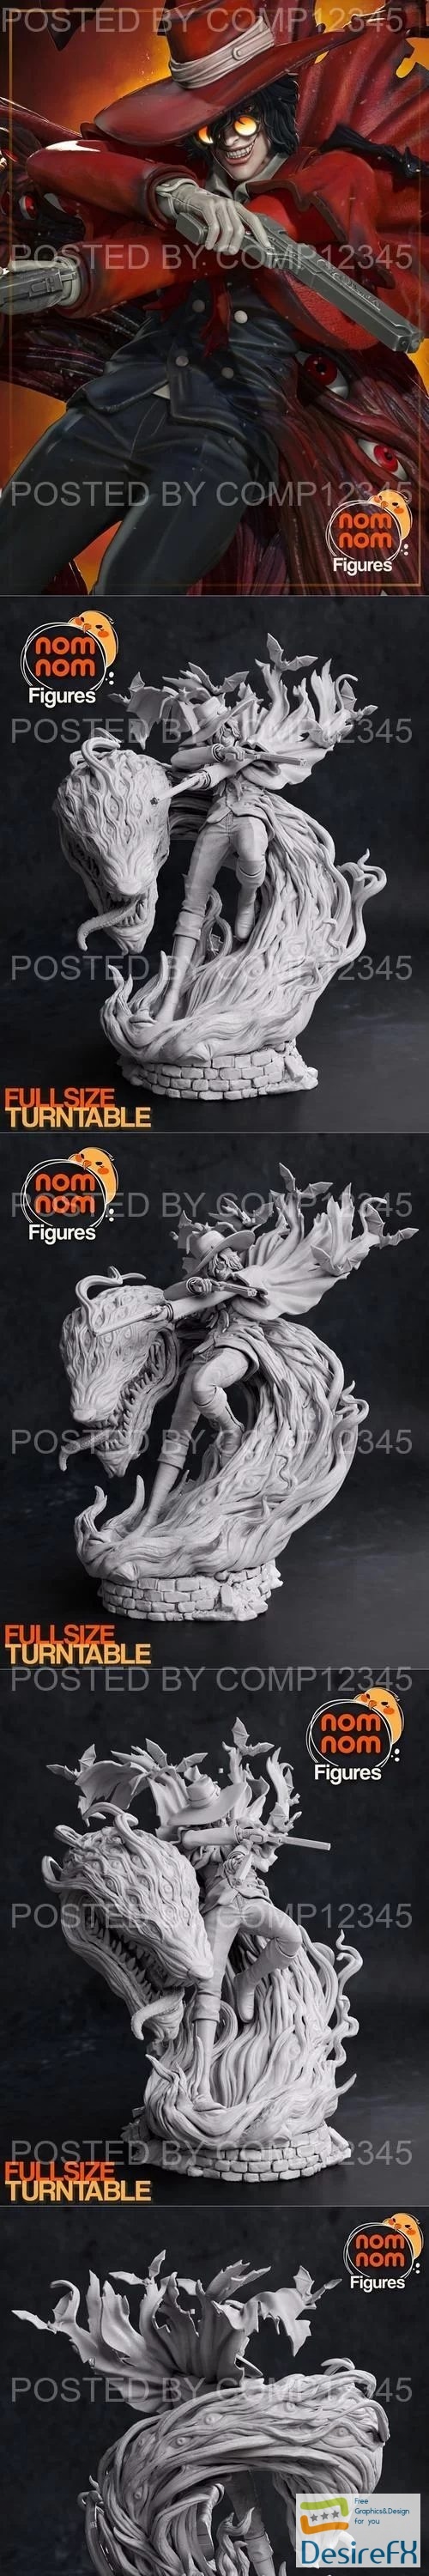 Nomnom Figures - Alucard from Hellsing 3D Print